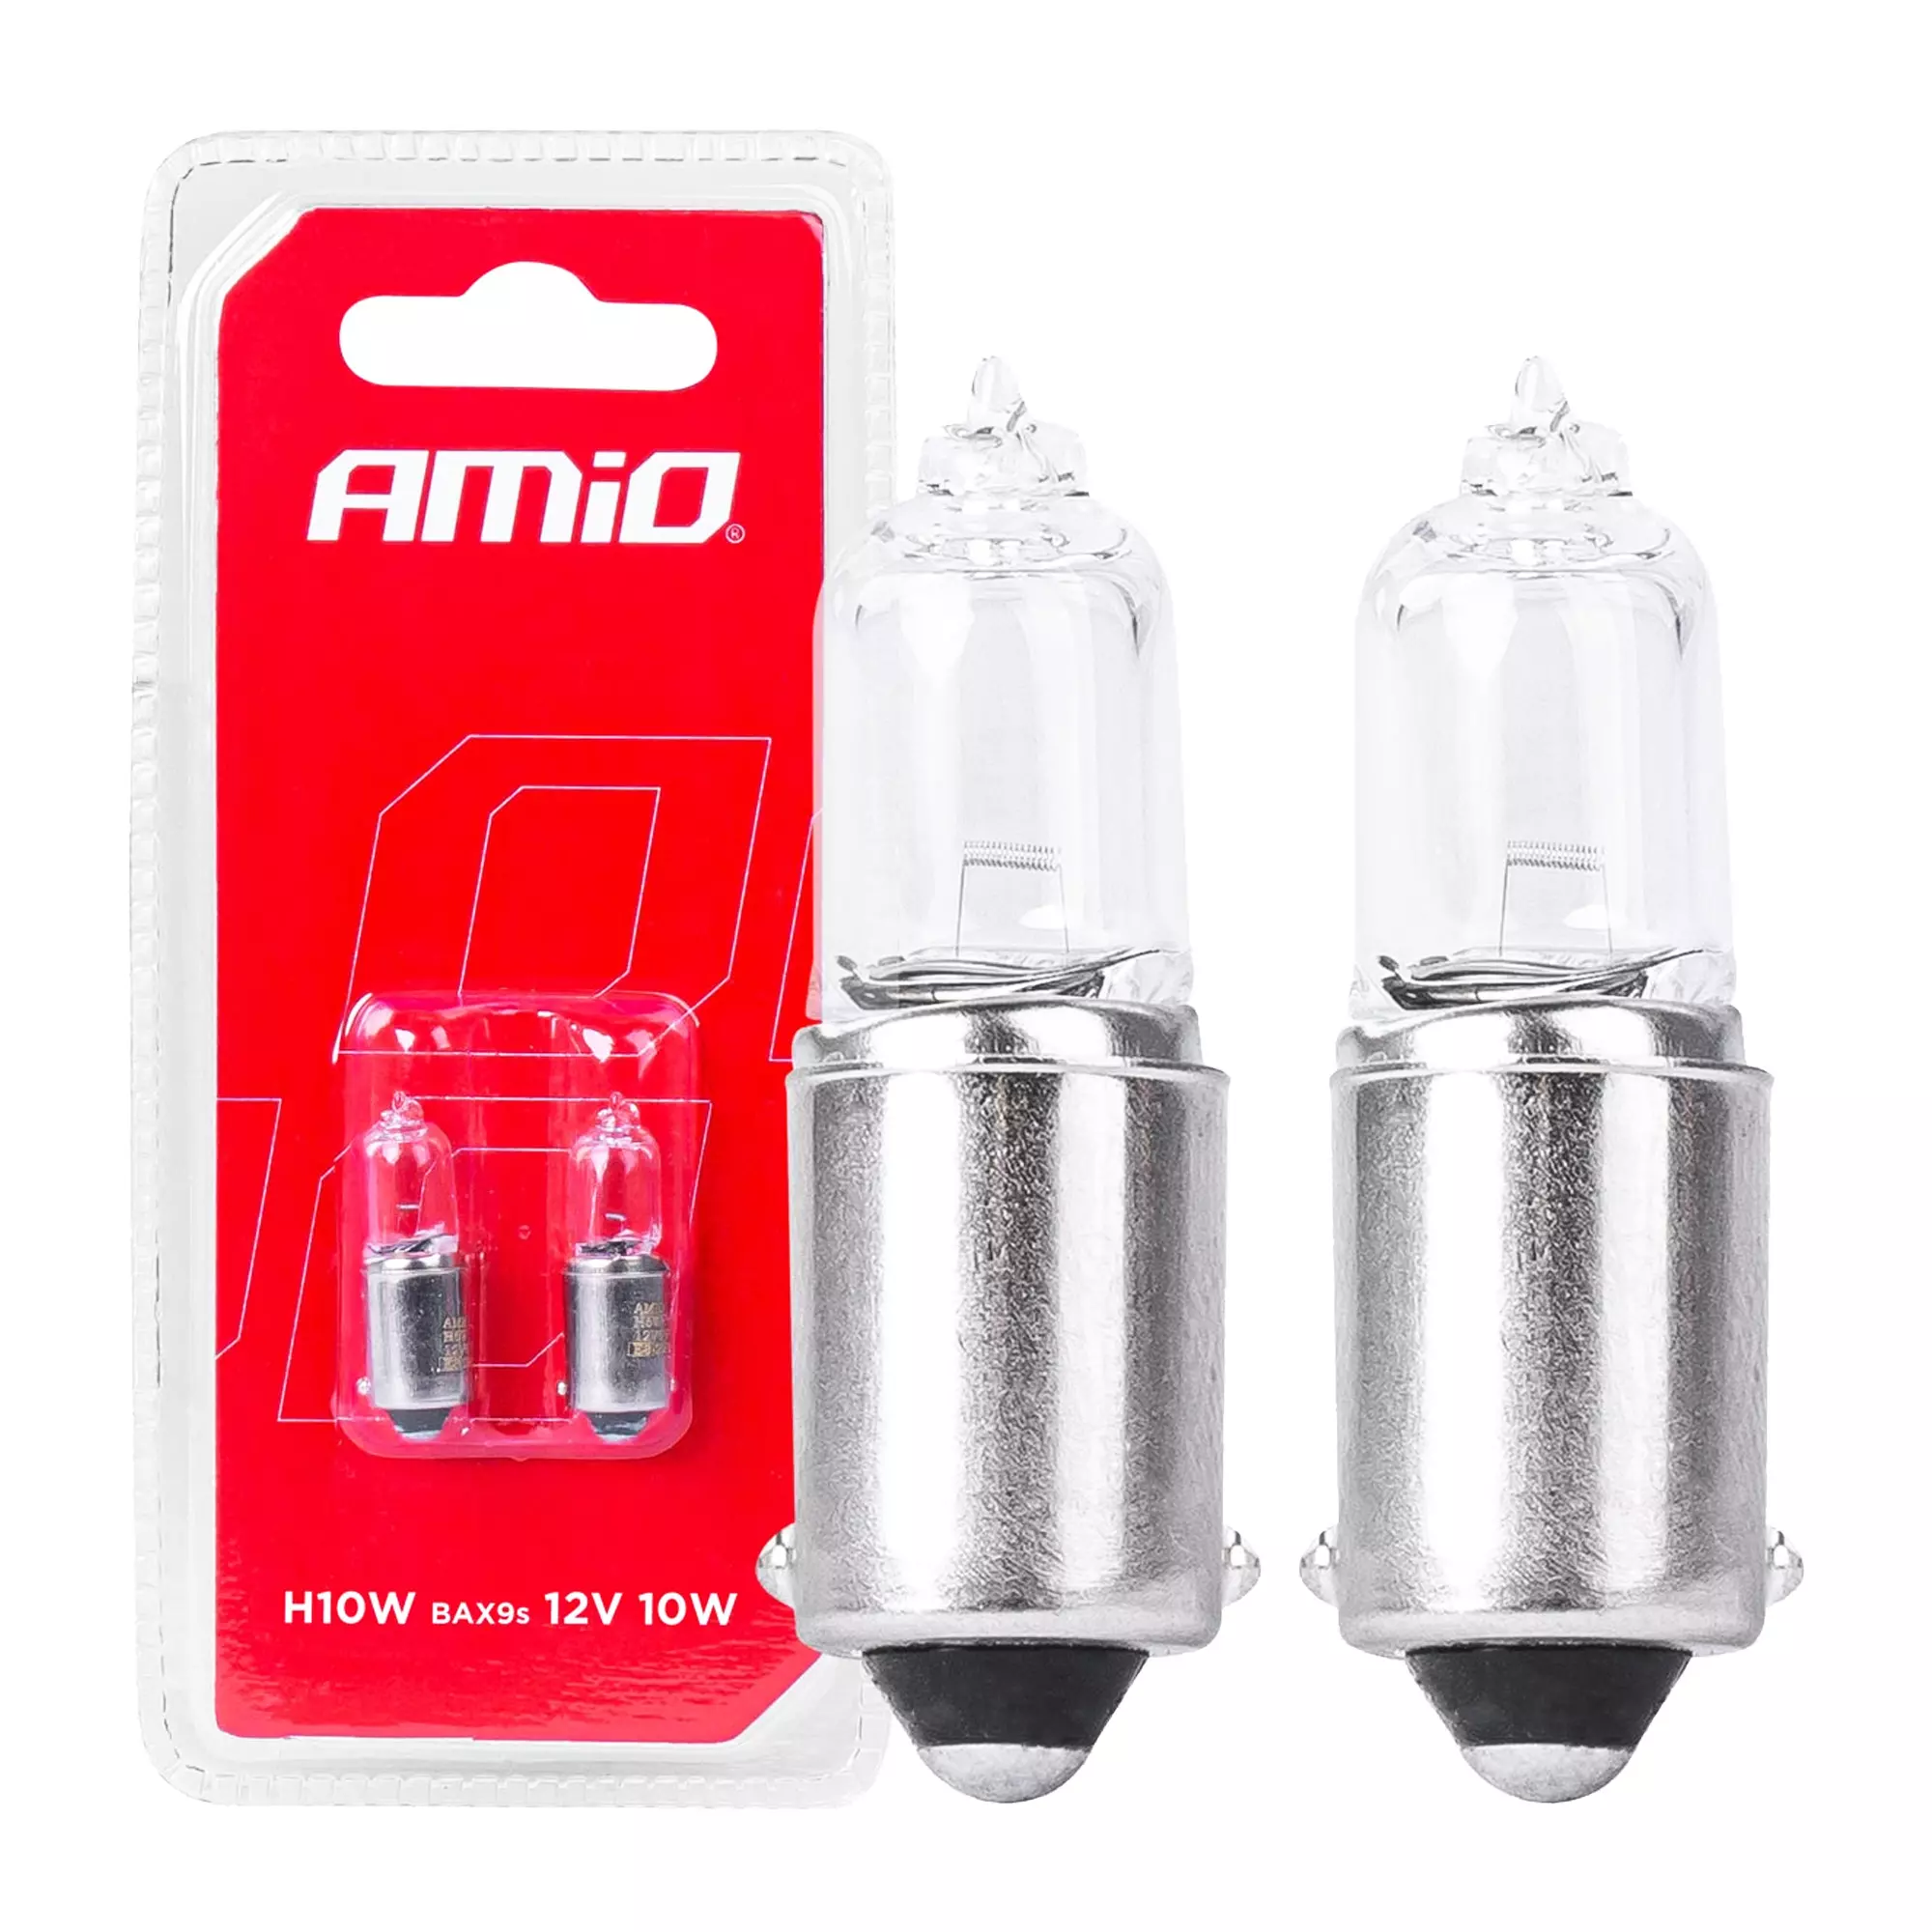 Галогенные лампочки Amio H10W 12V 10W BAX9S 2 шт (03356)